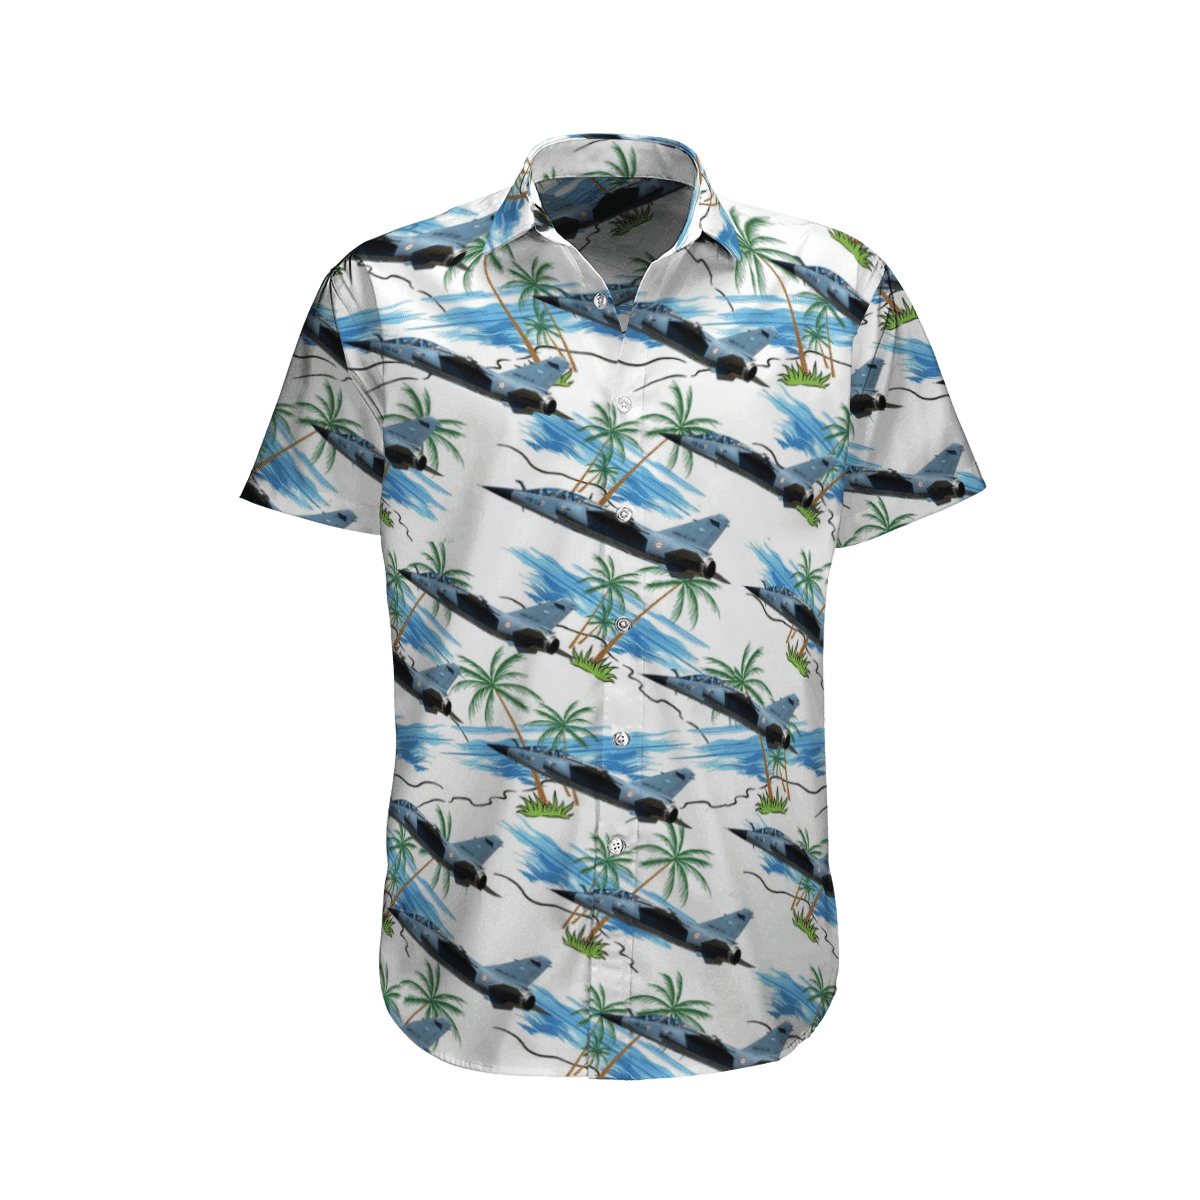 Enjoy your summer with top cool hawaiian shirt below 201